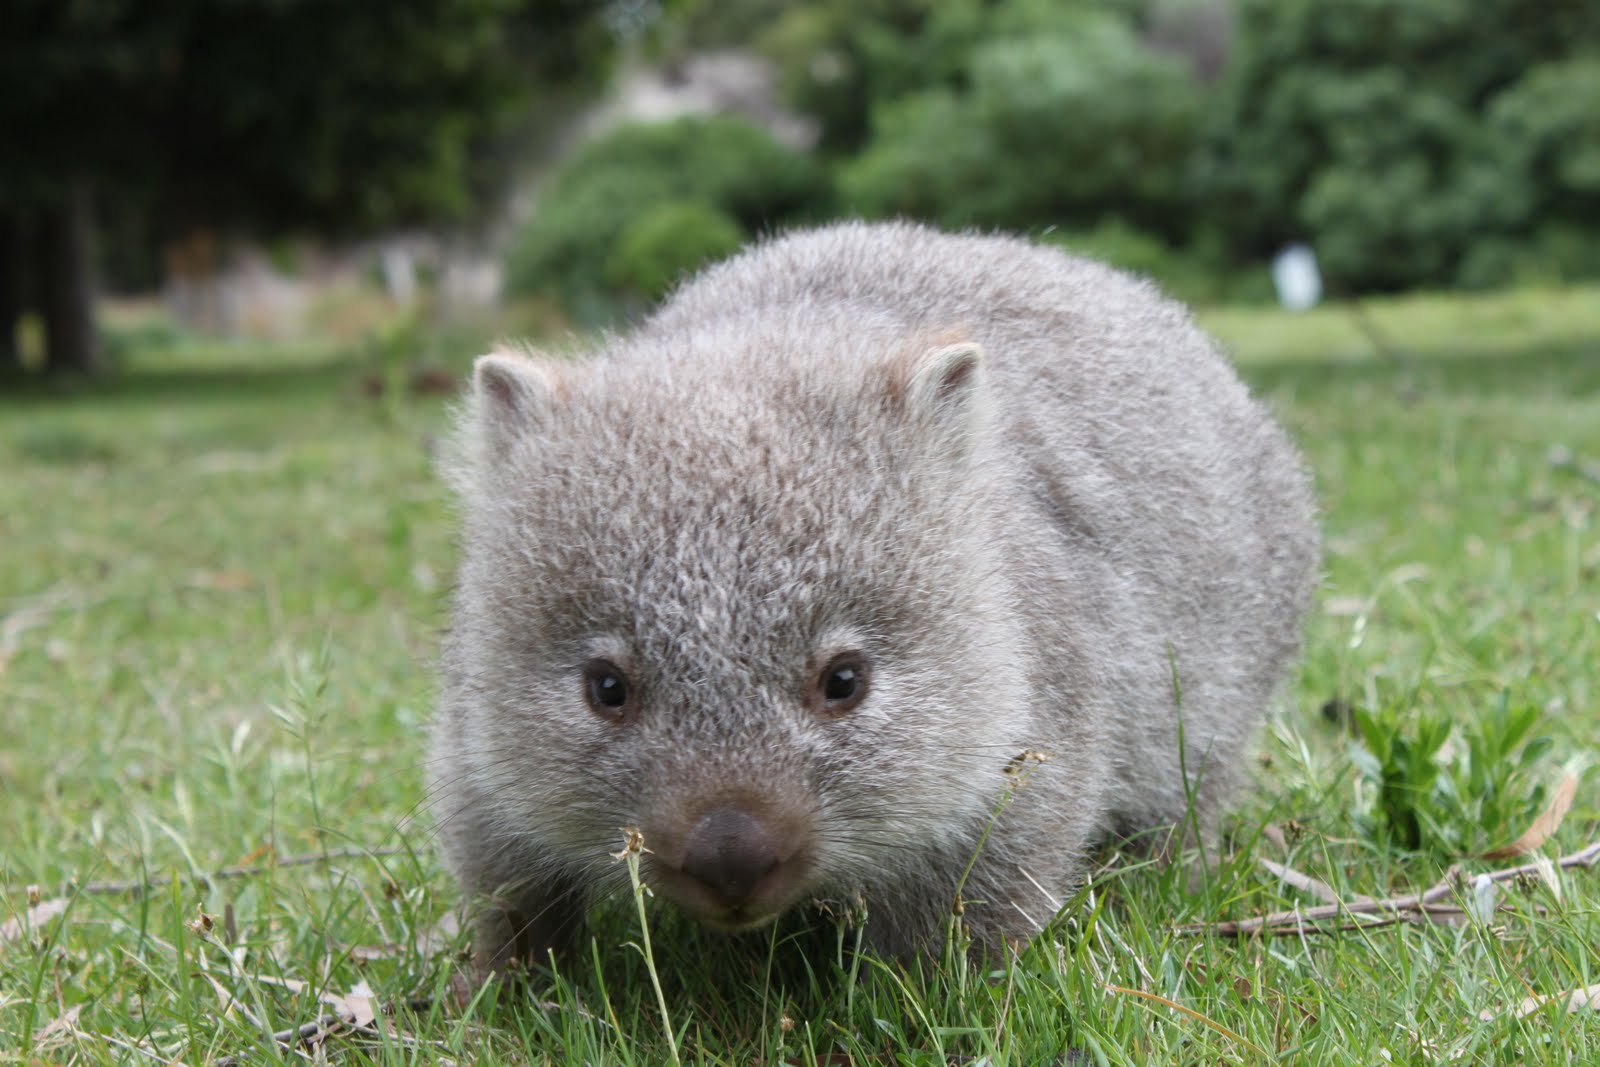 Wombat photos